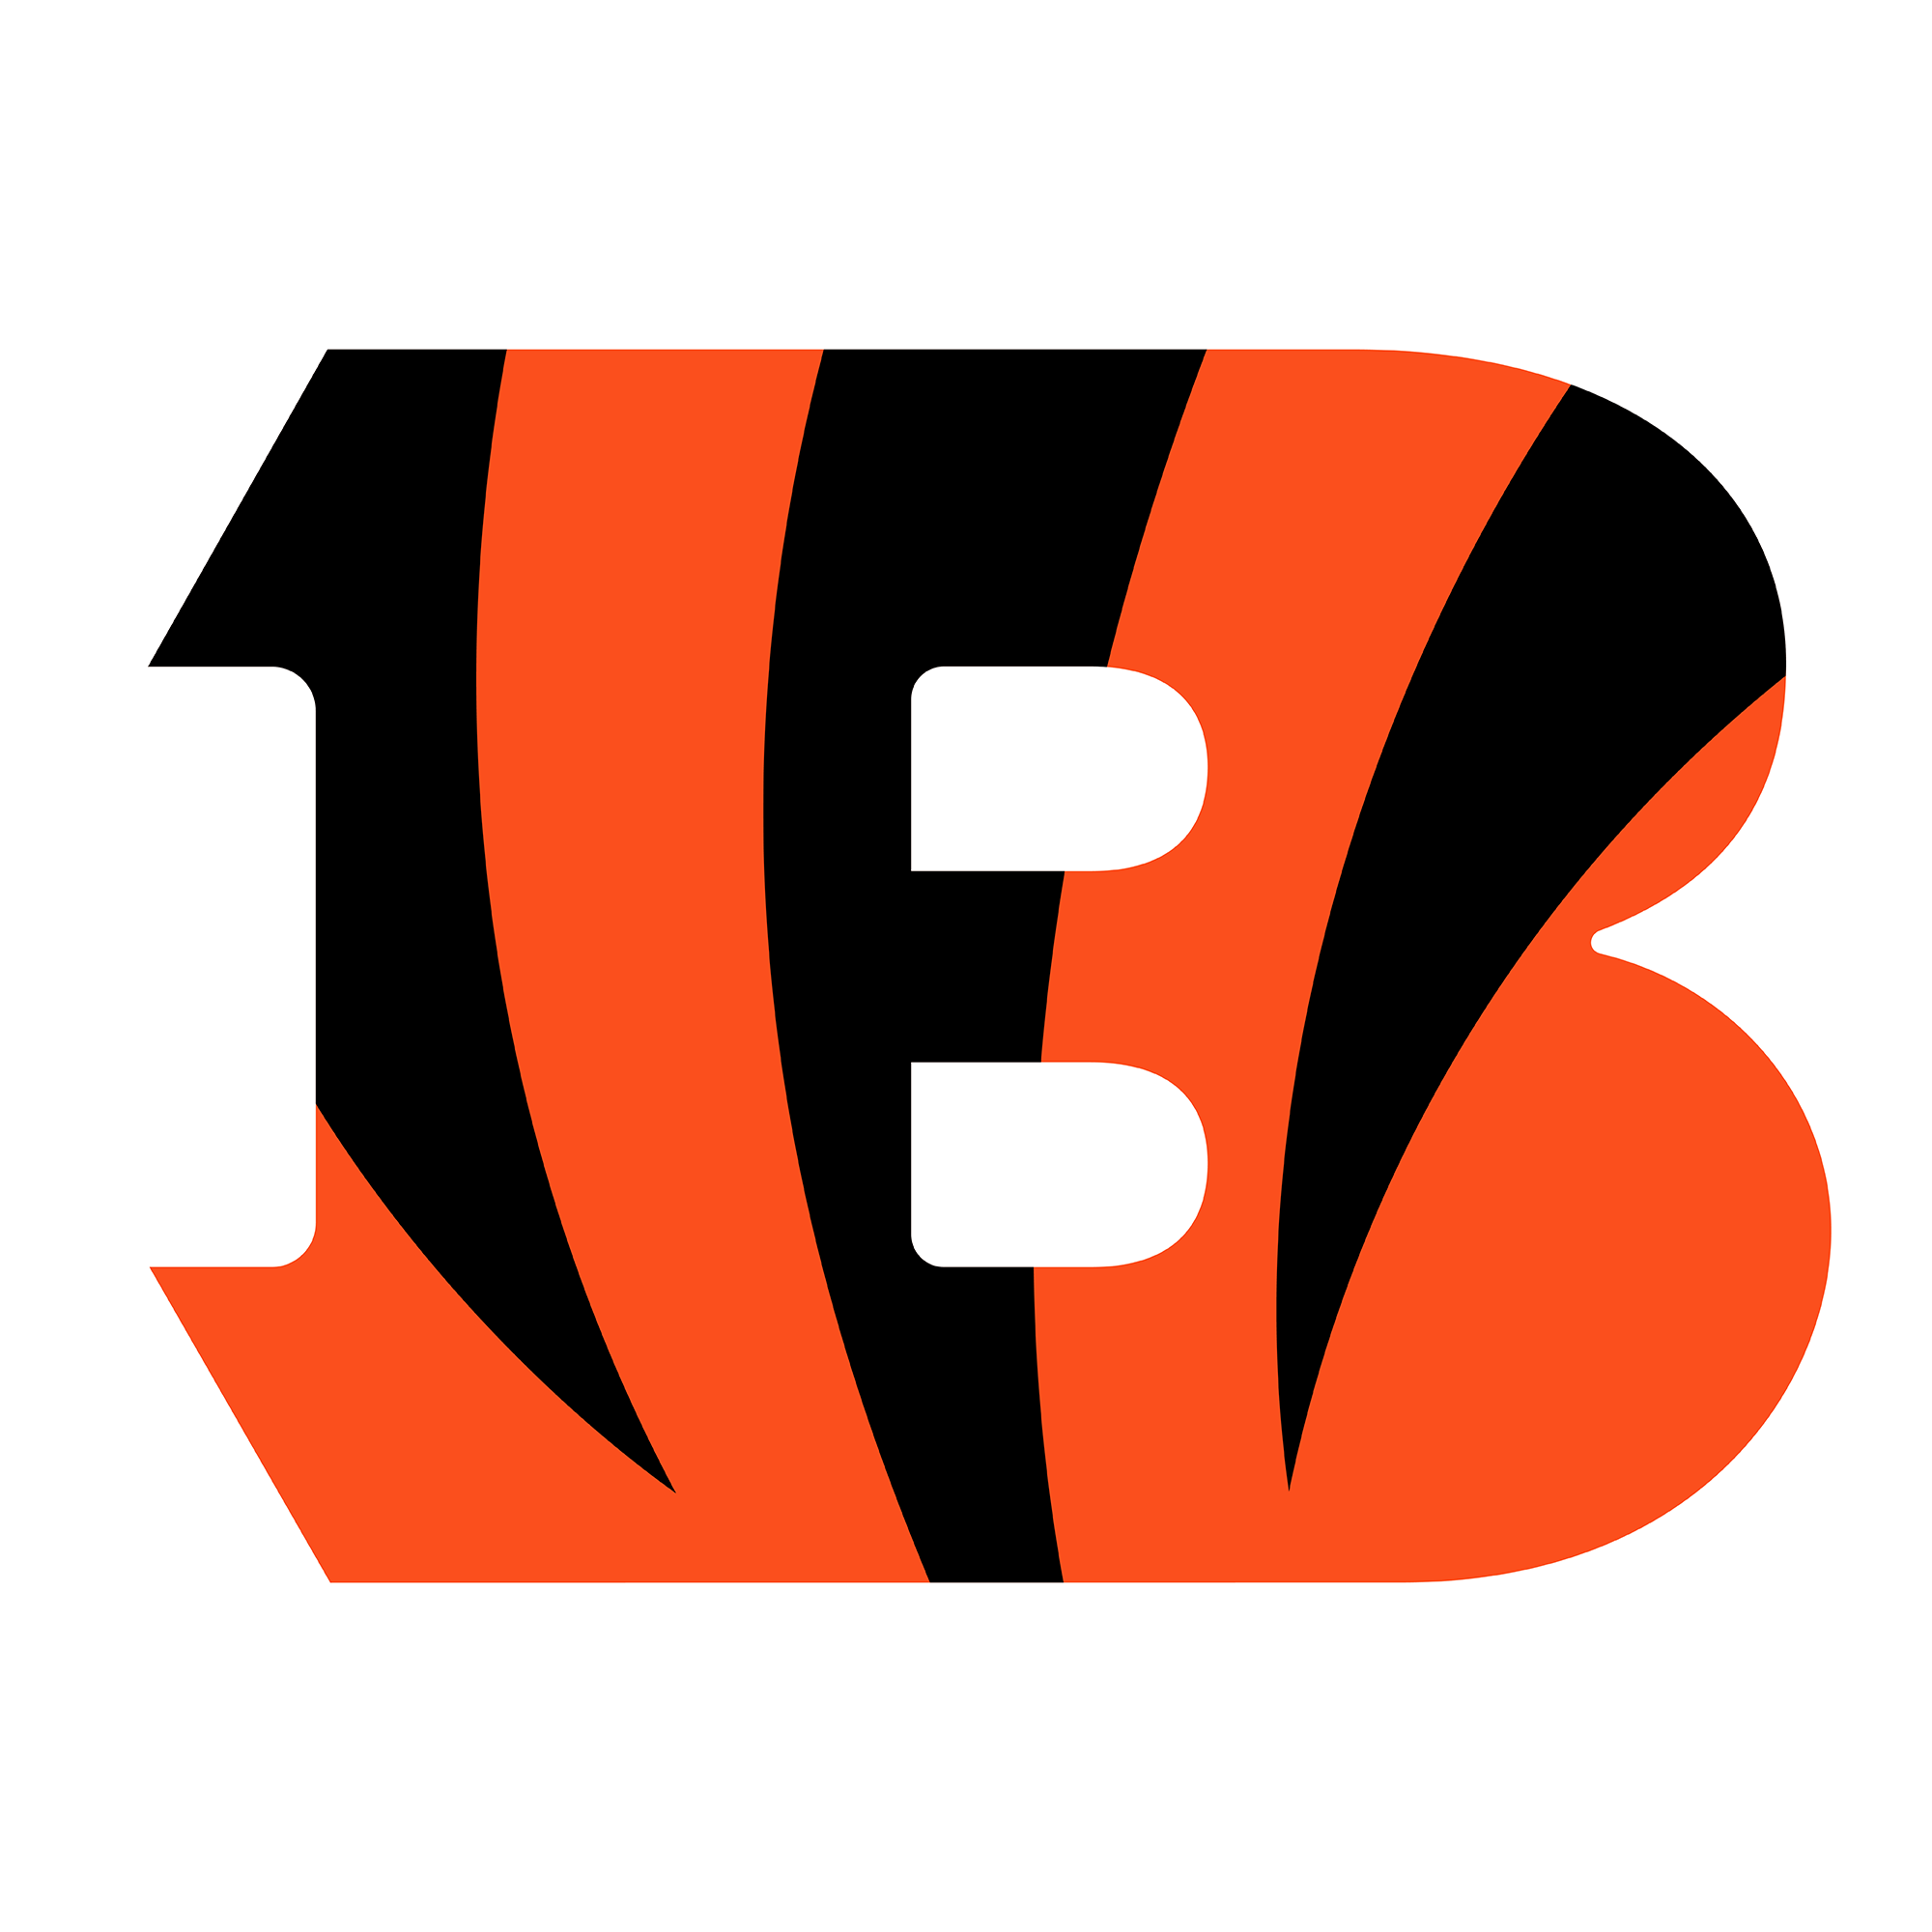 NFL Imagined  Cincinnati Bengals (2/32) by Brave Bird Creative on